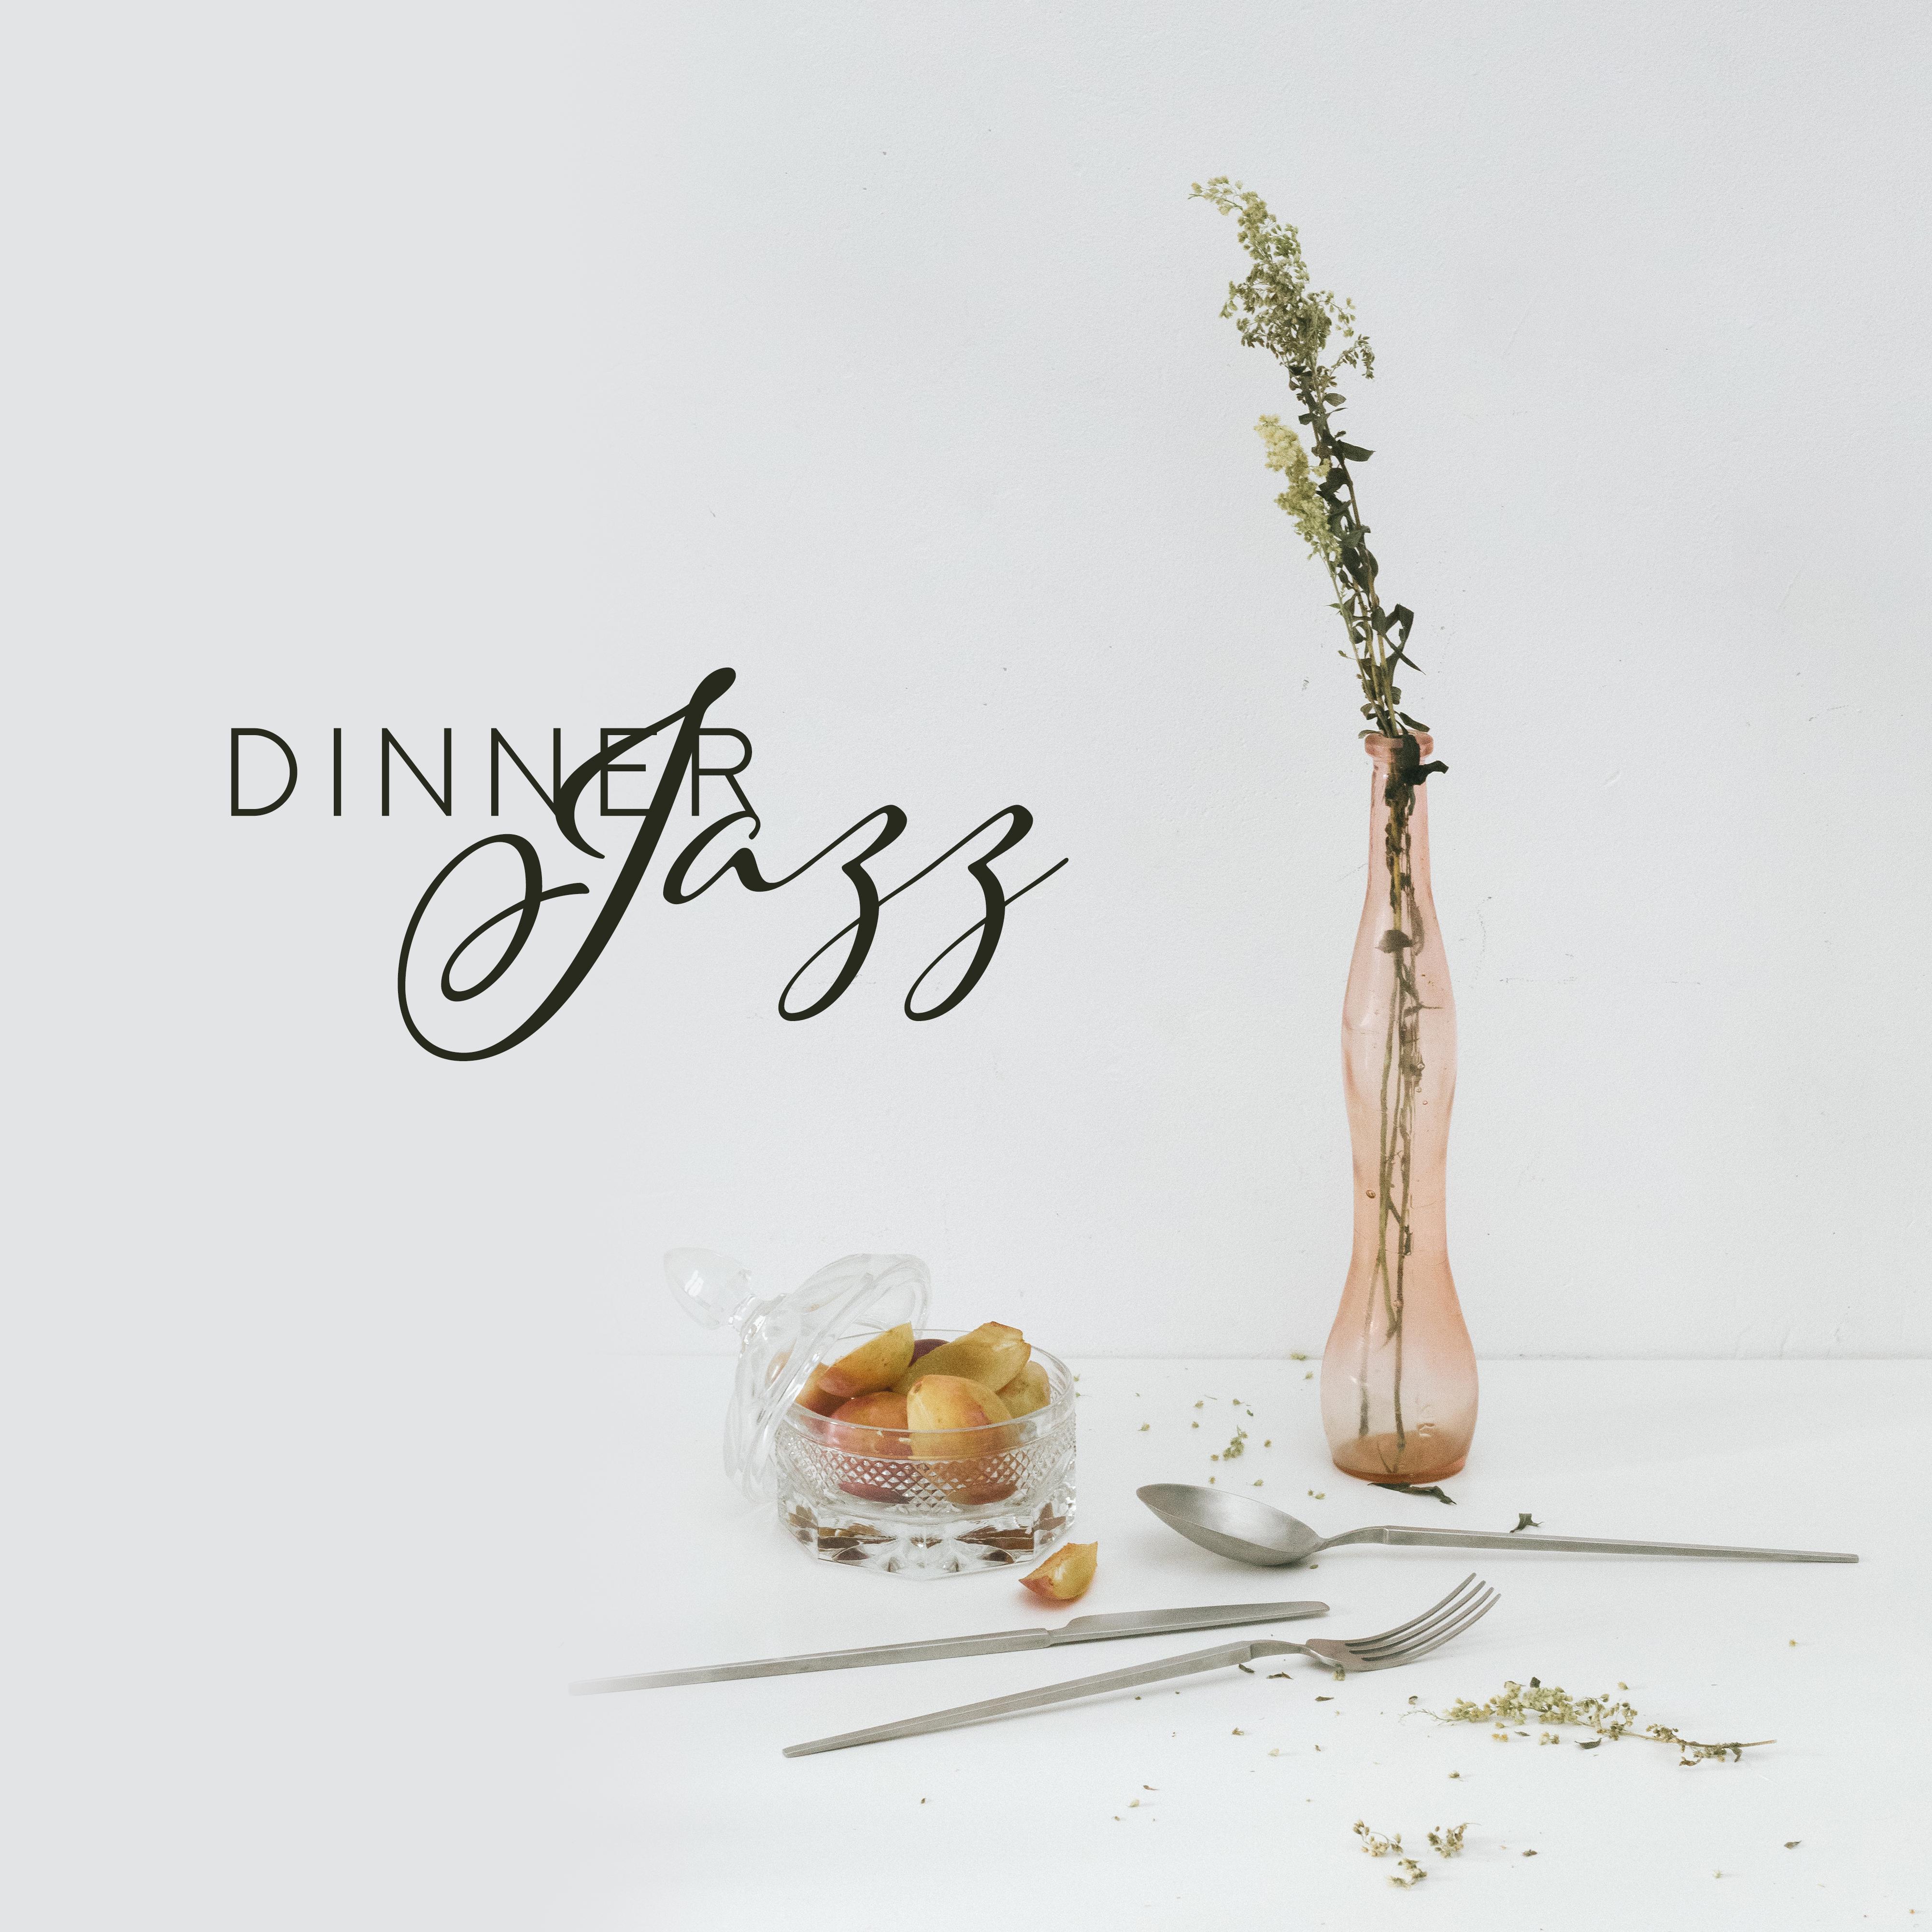 Dinner Jazz – Instrumental Songs for Restaurant, Relaxation, Smooth Jazz for Dinner, Relaxing Cafe Music